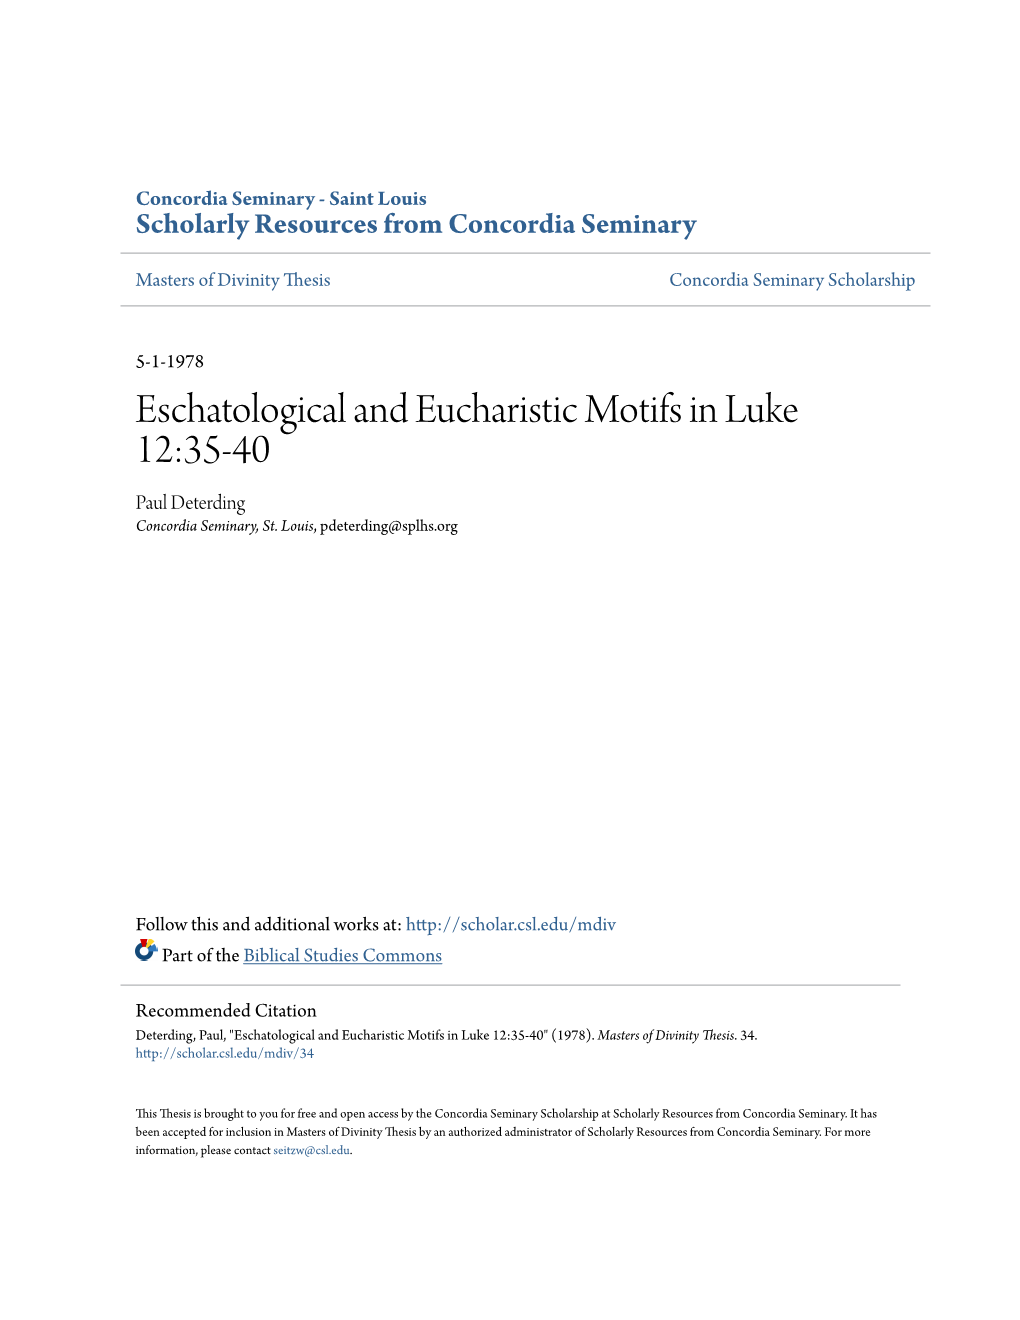 Eschatological and Eucharistic Motifs in Luke 12:35-40 Paul Deterding Concordia Seminary, St